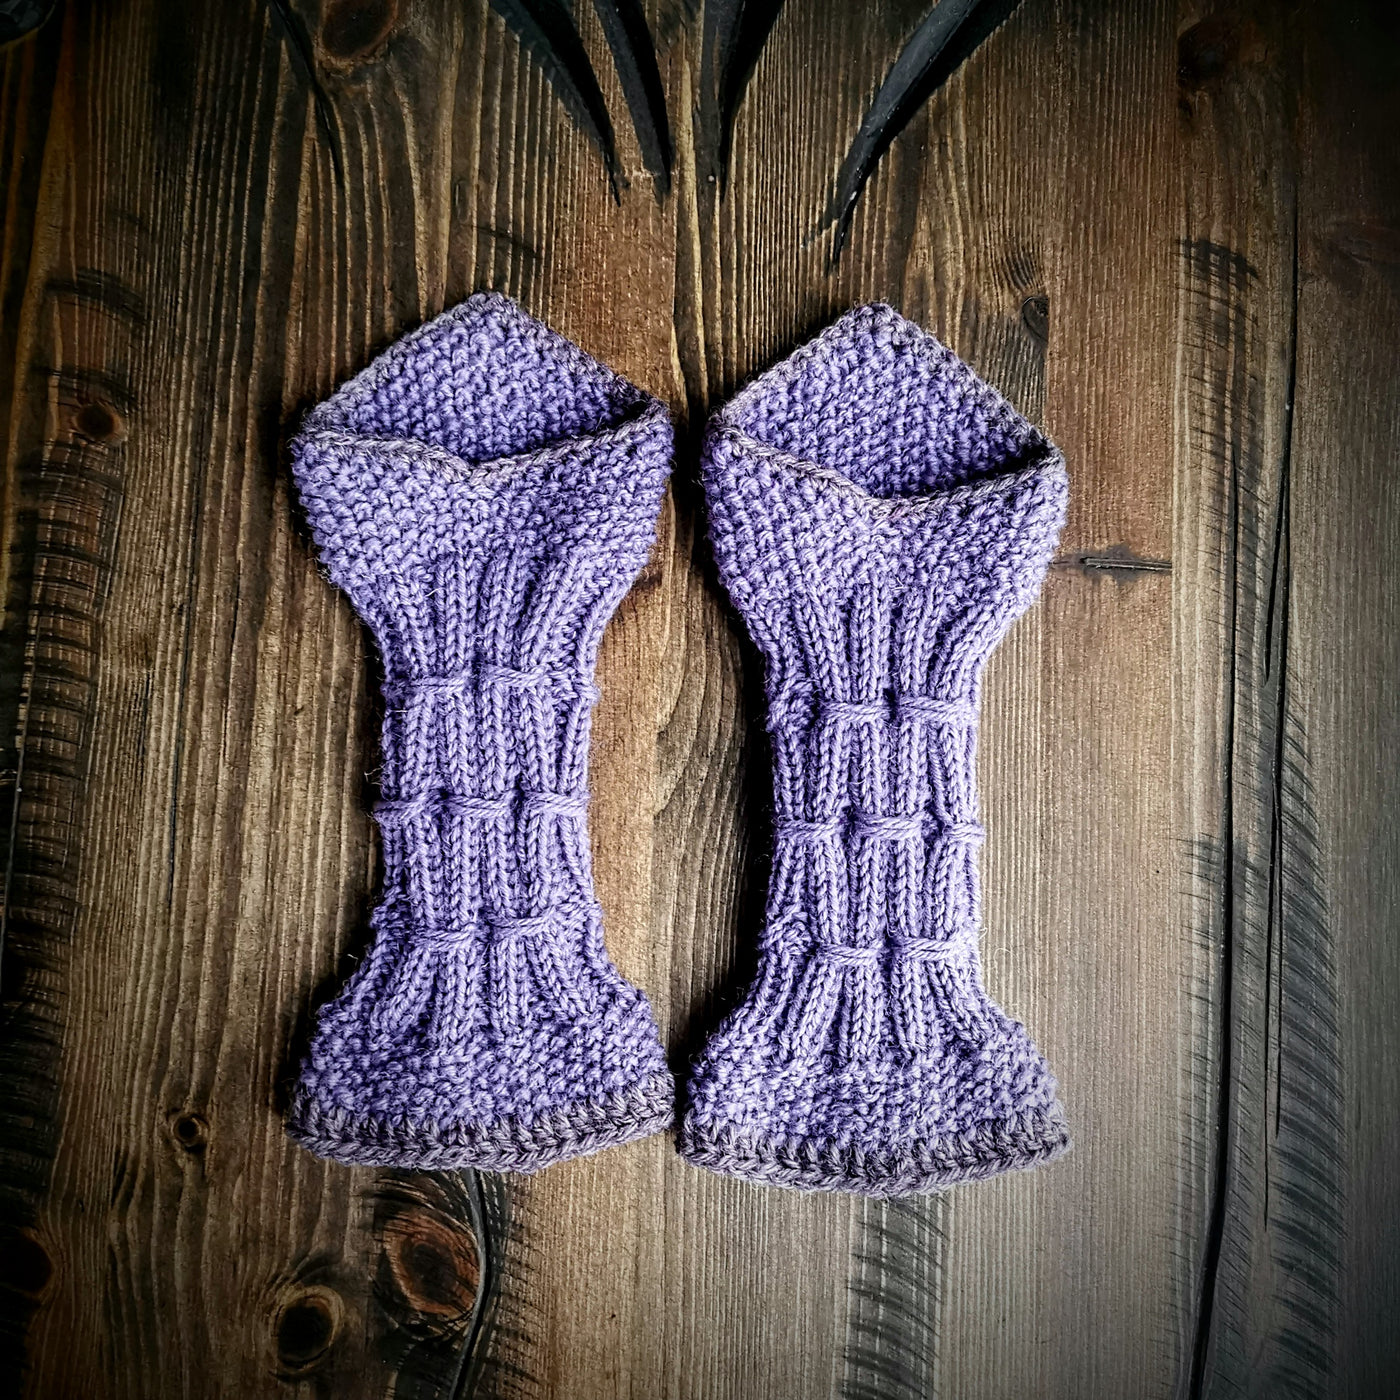 Handmade knitted sweet lavender wrist warmers